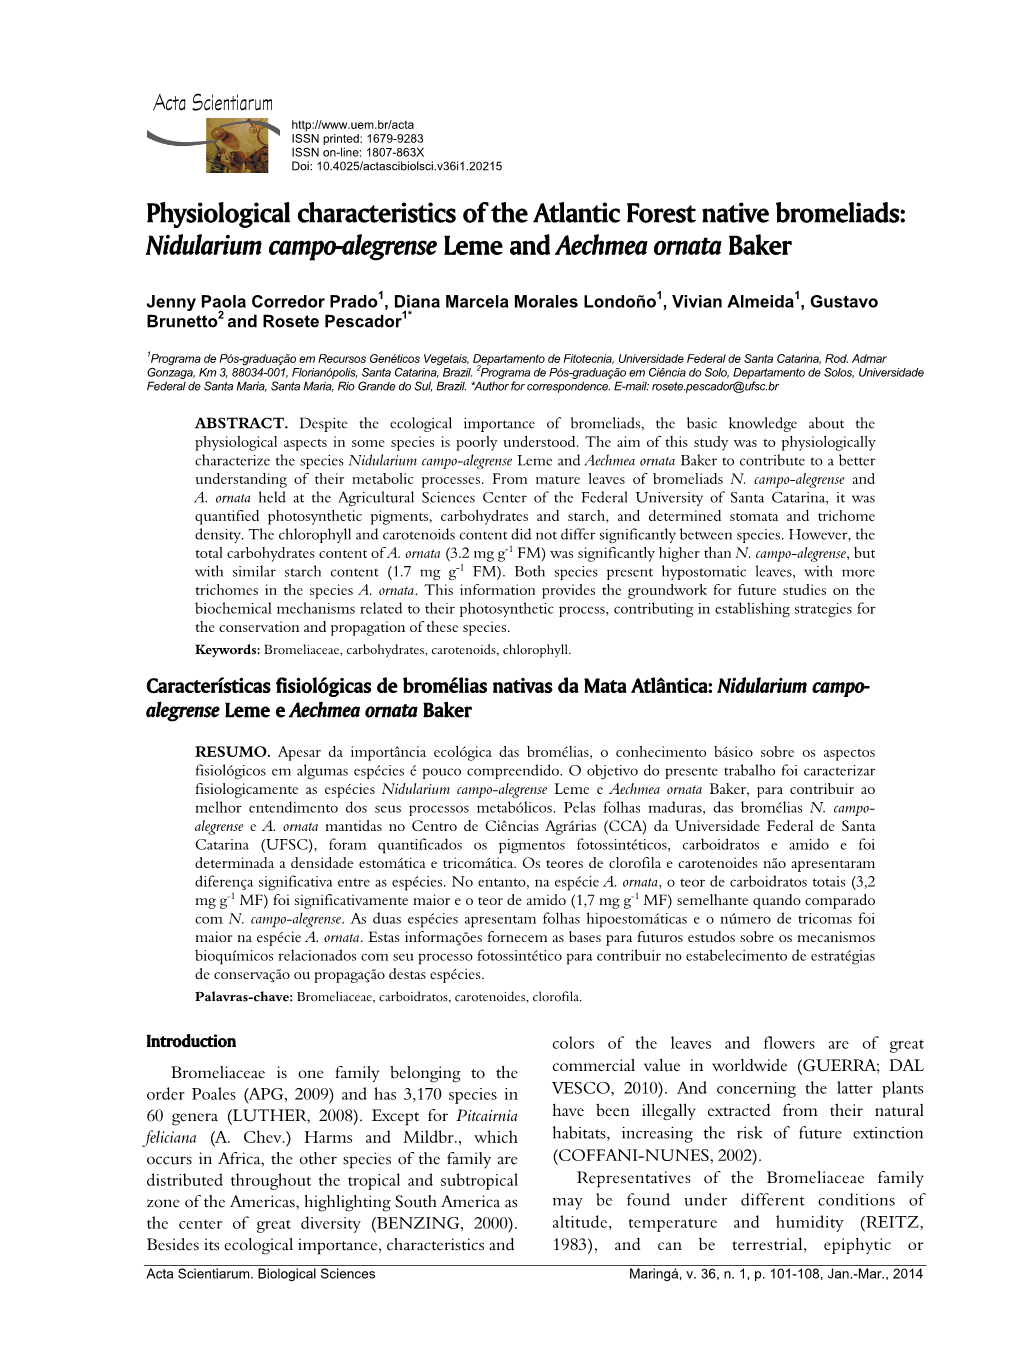 Physiological Characteristics of the Atlantic Forest Native Bromeliads: Nidularium Campo-Alegrense Leme and Aechmea Ornata Baker